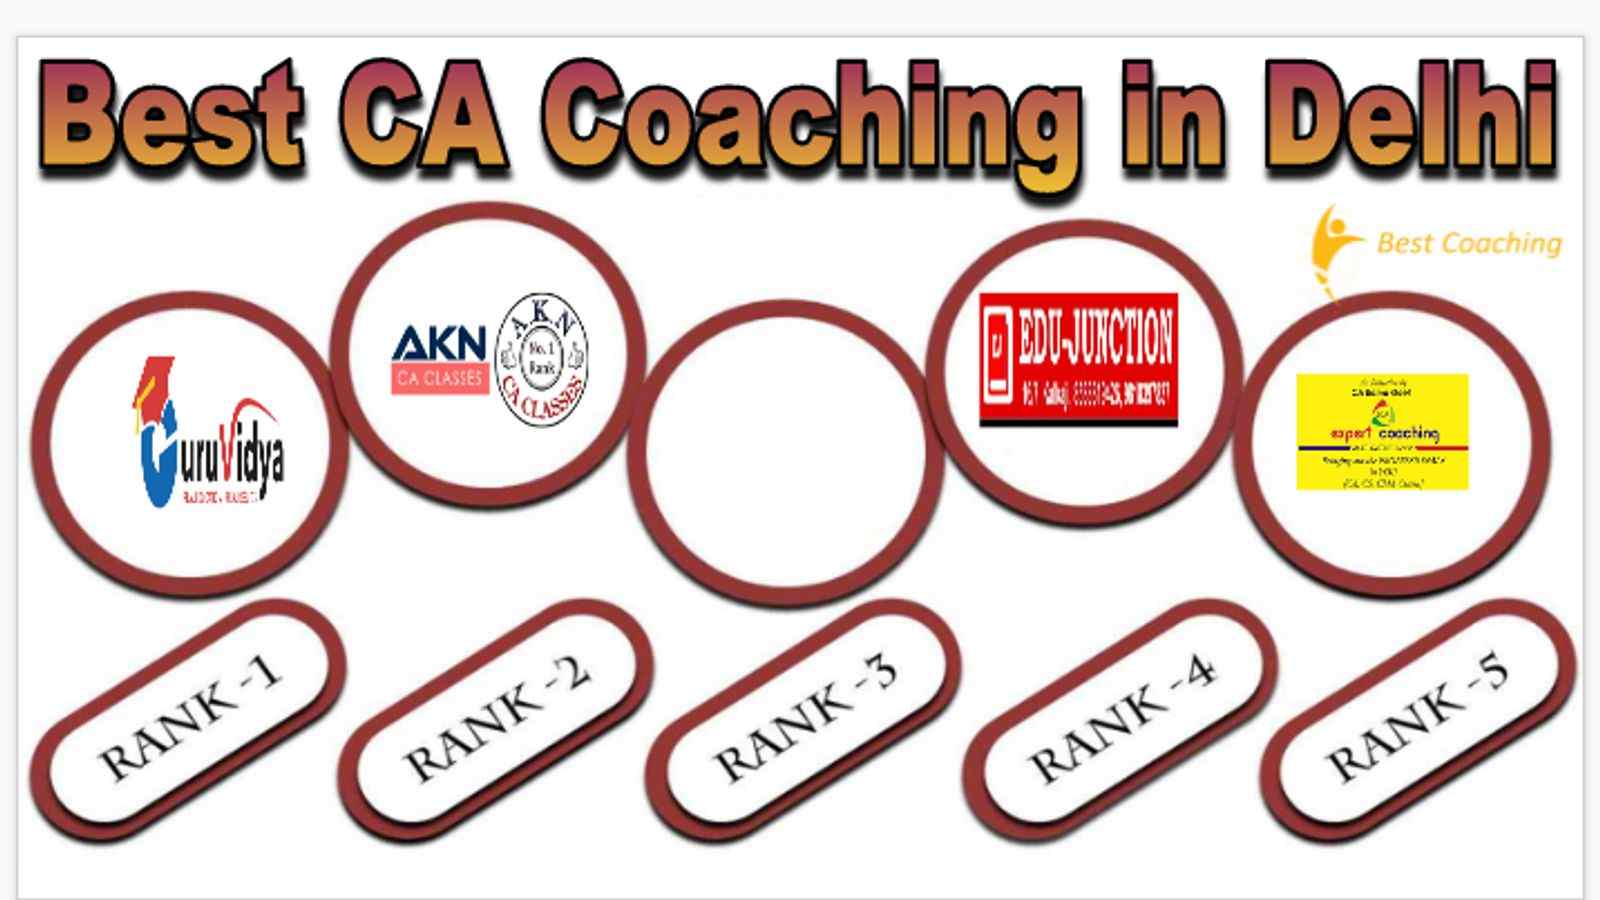 Best CA Coaching in Delhi